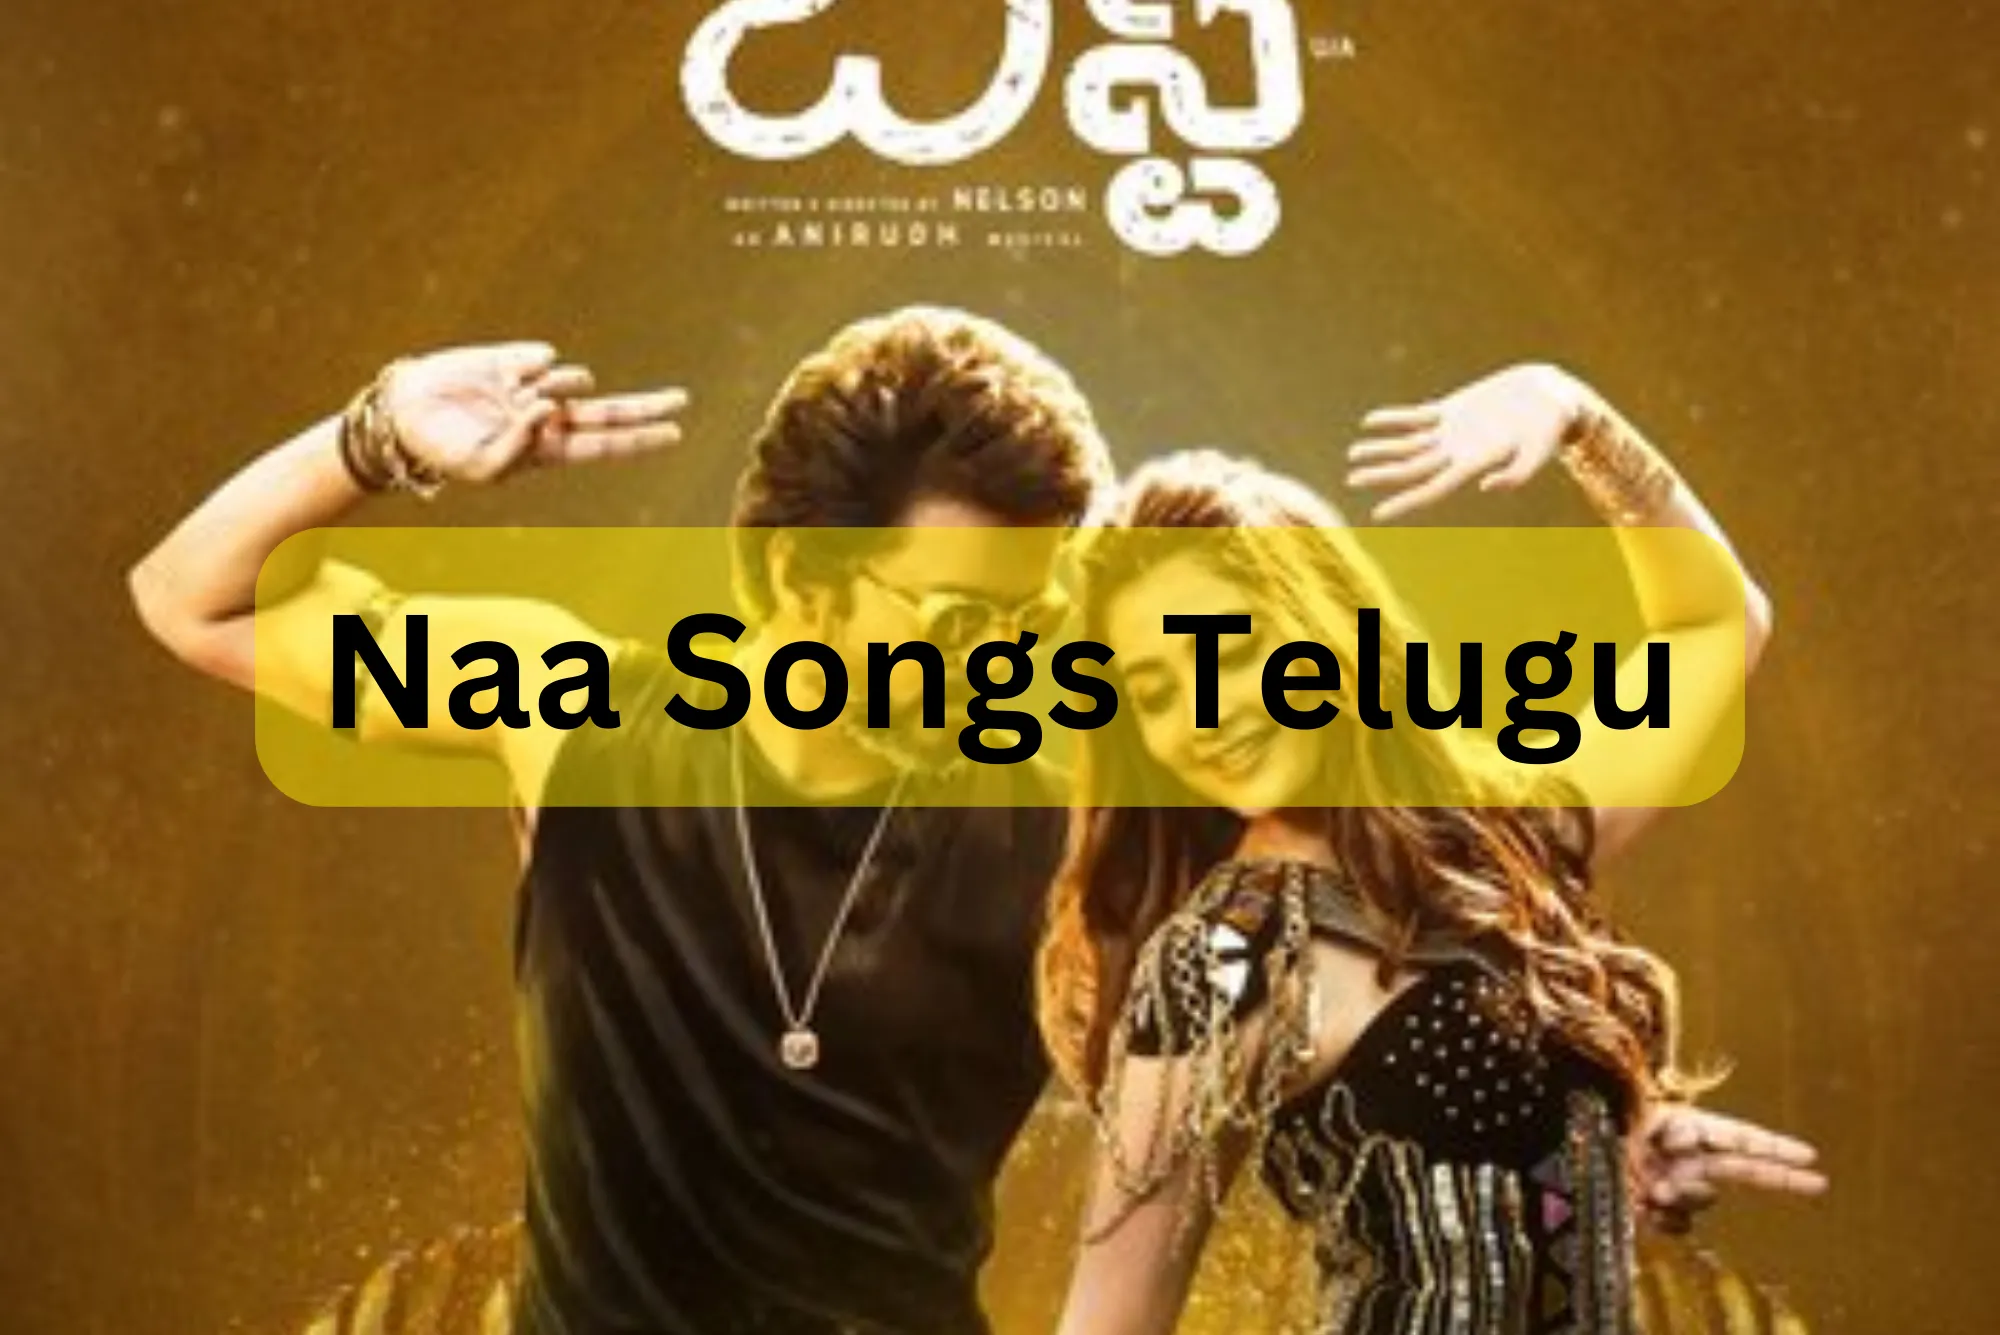 Naa Songs Telugu